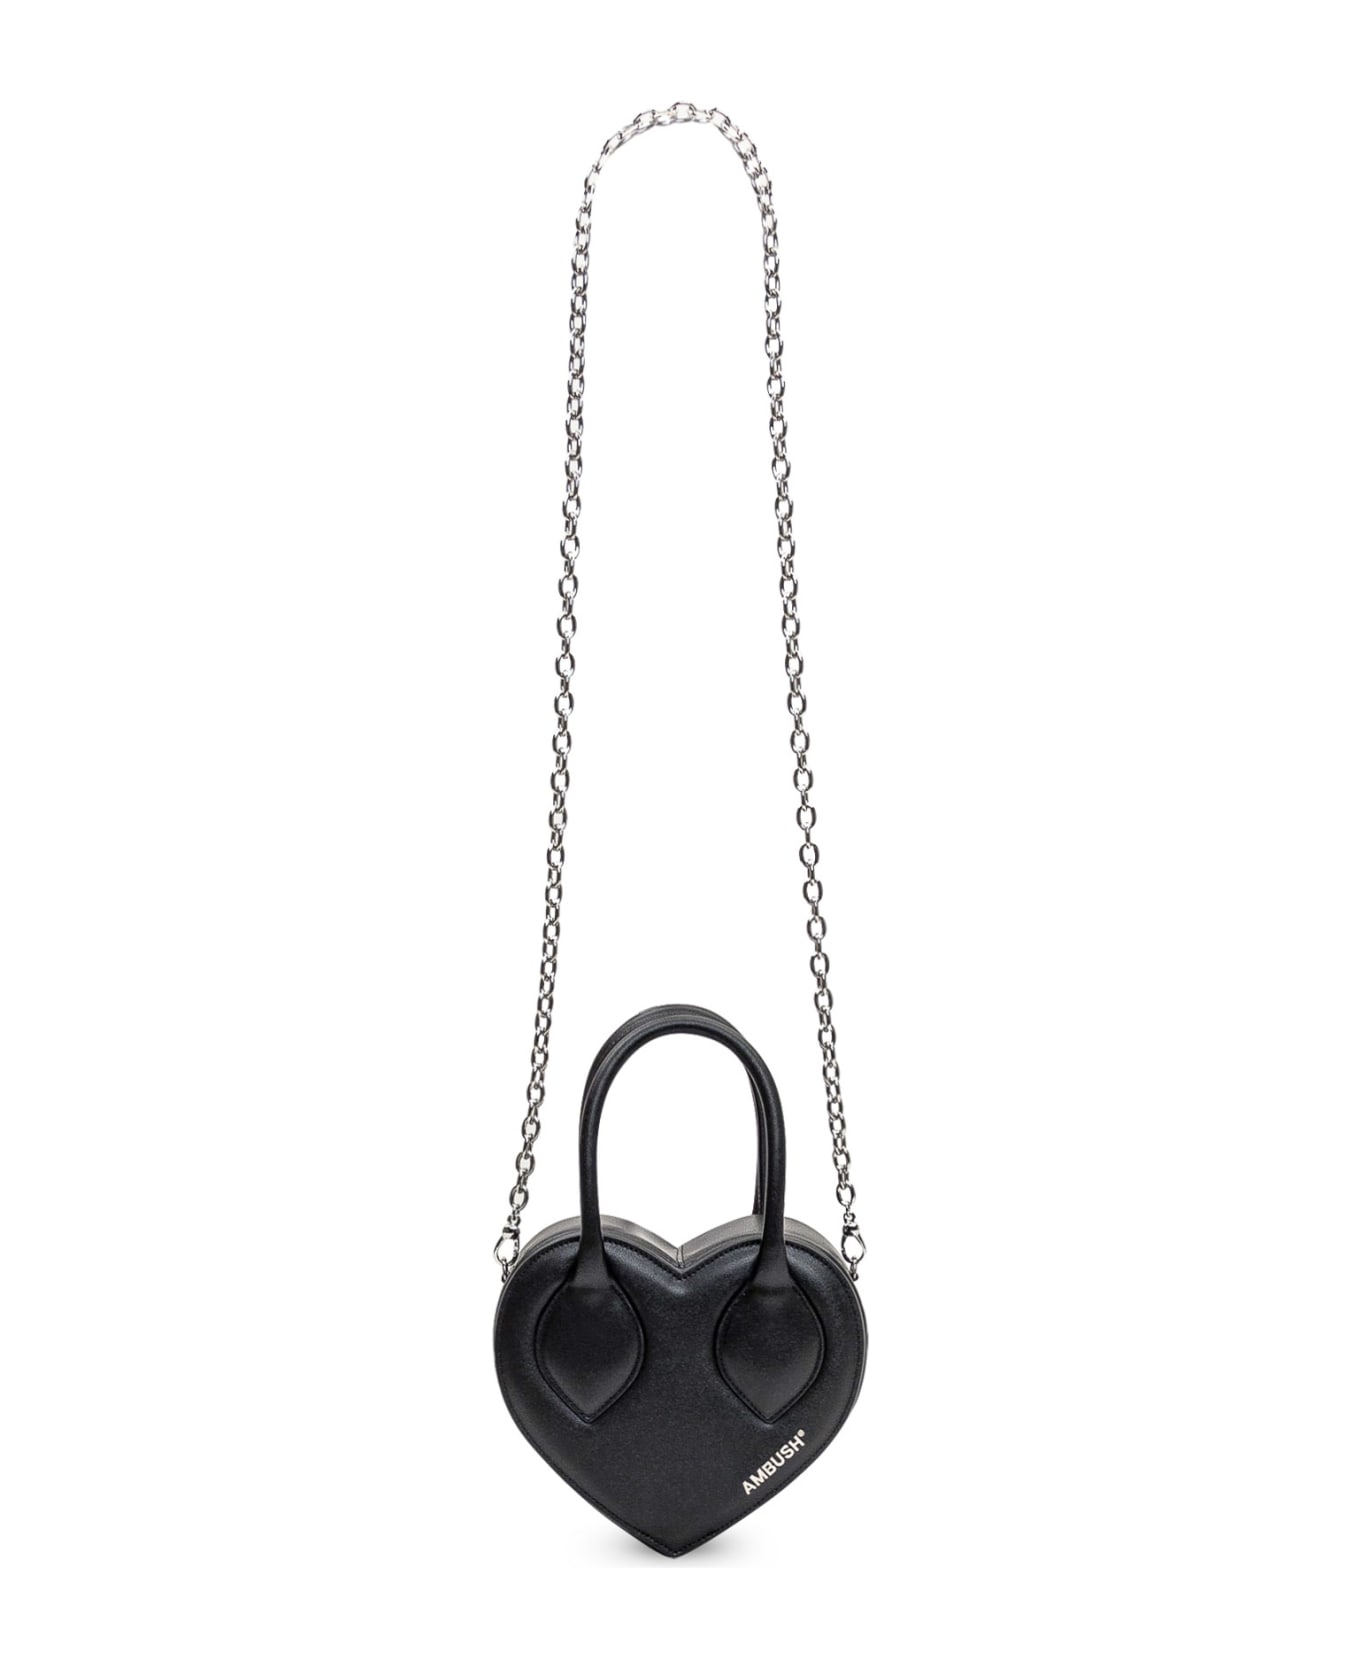 AMBUSH Heart Handle Handbag - BLACK トートバッグ